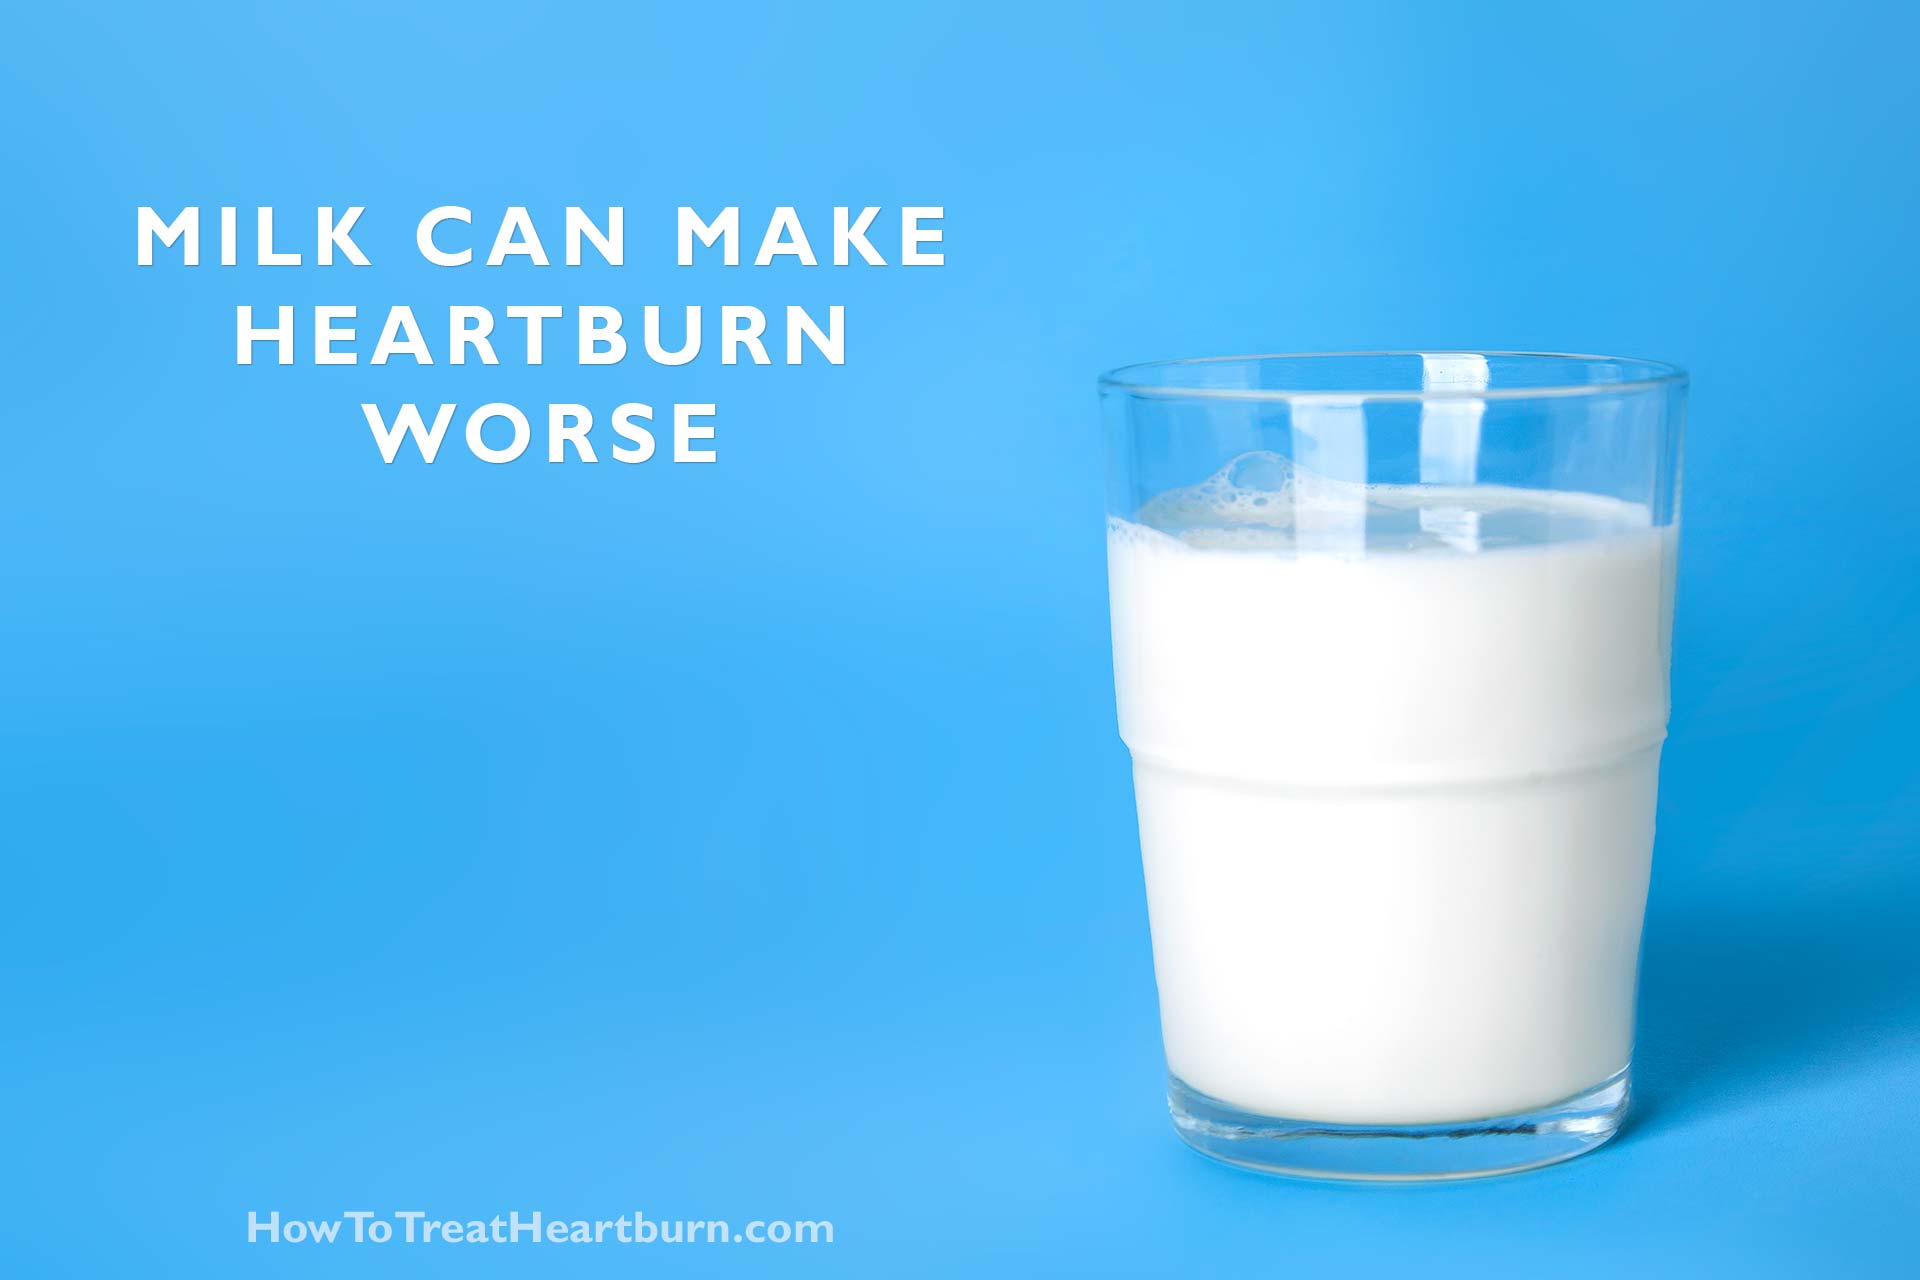 Does Milk Help Heartburn?